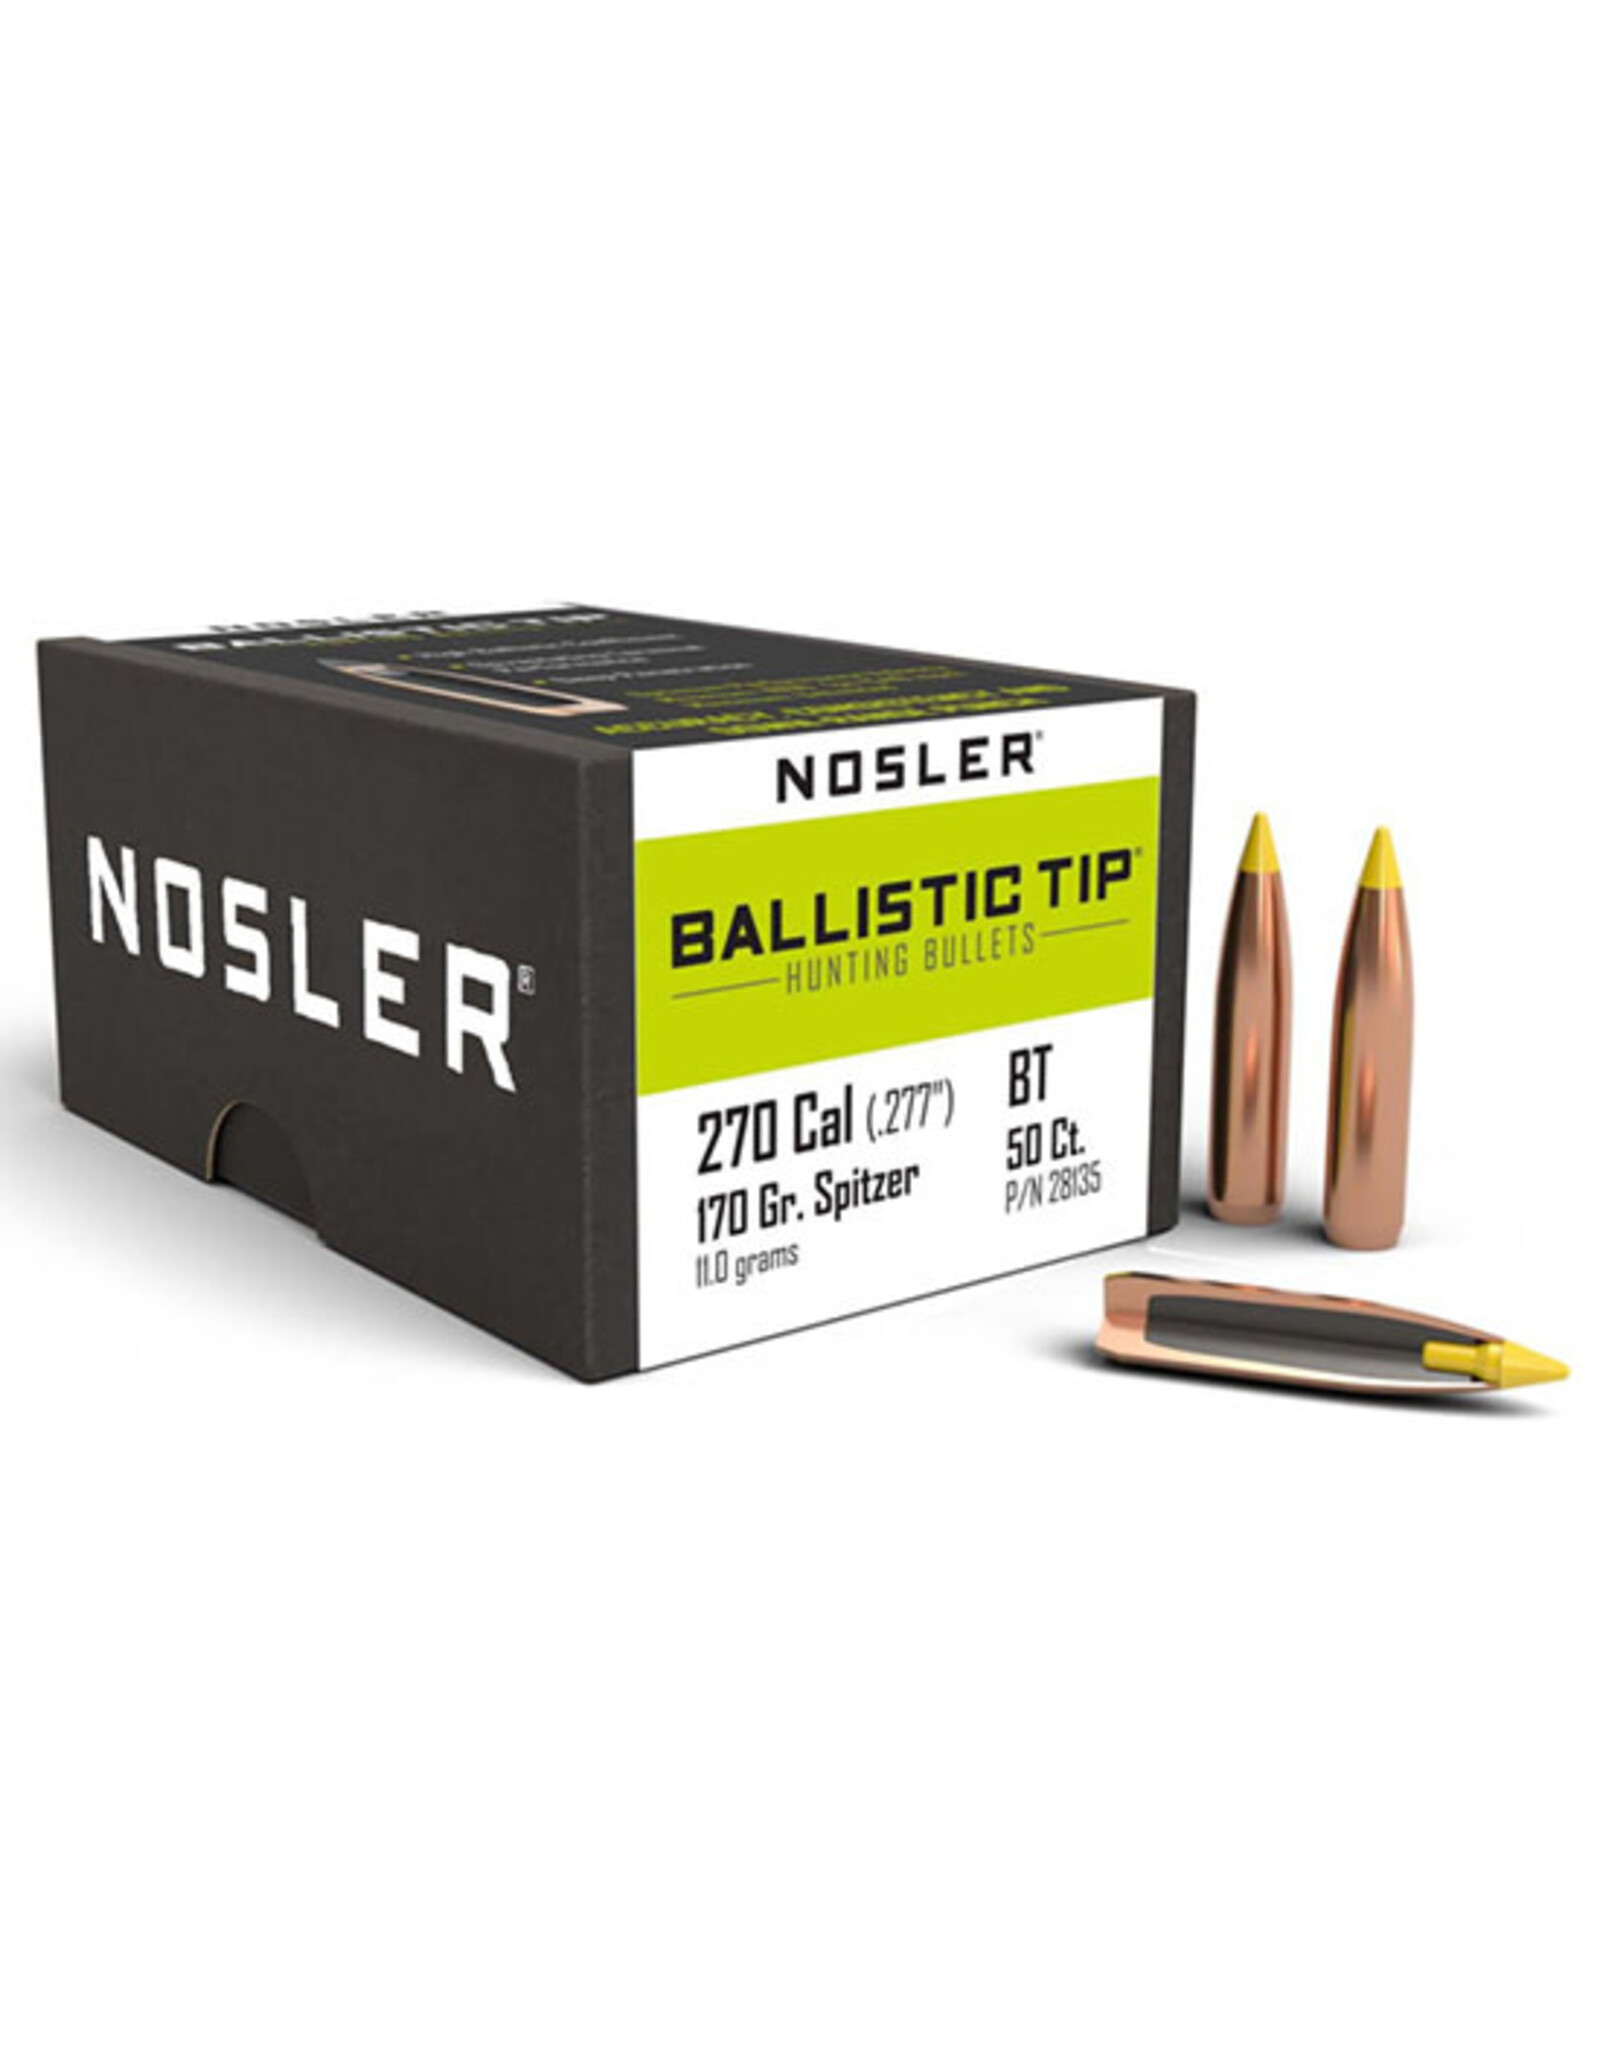 Nosler Ballistic Tip .270 Cal (.277") 170 Gr Spitzer BT - 50 Count